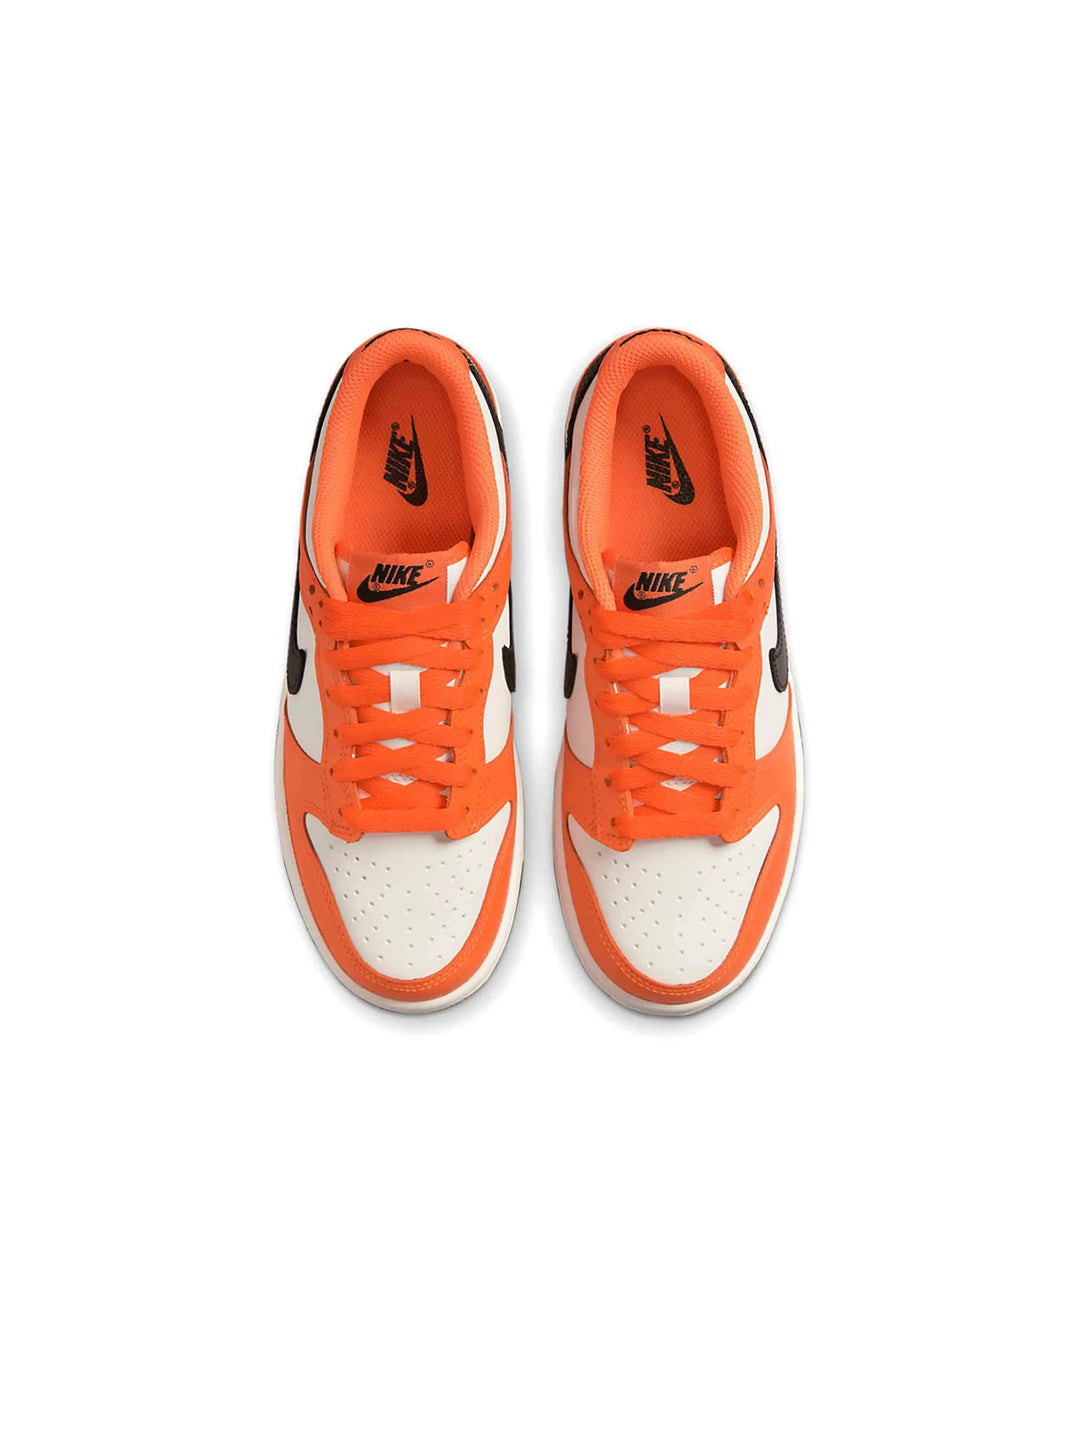 Nike Dunk Low Safety Orange (GS) Prior